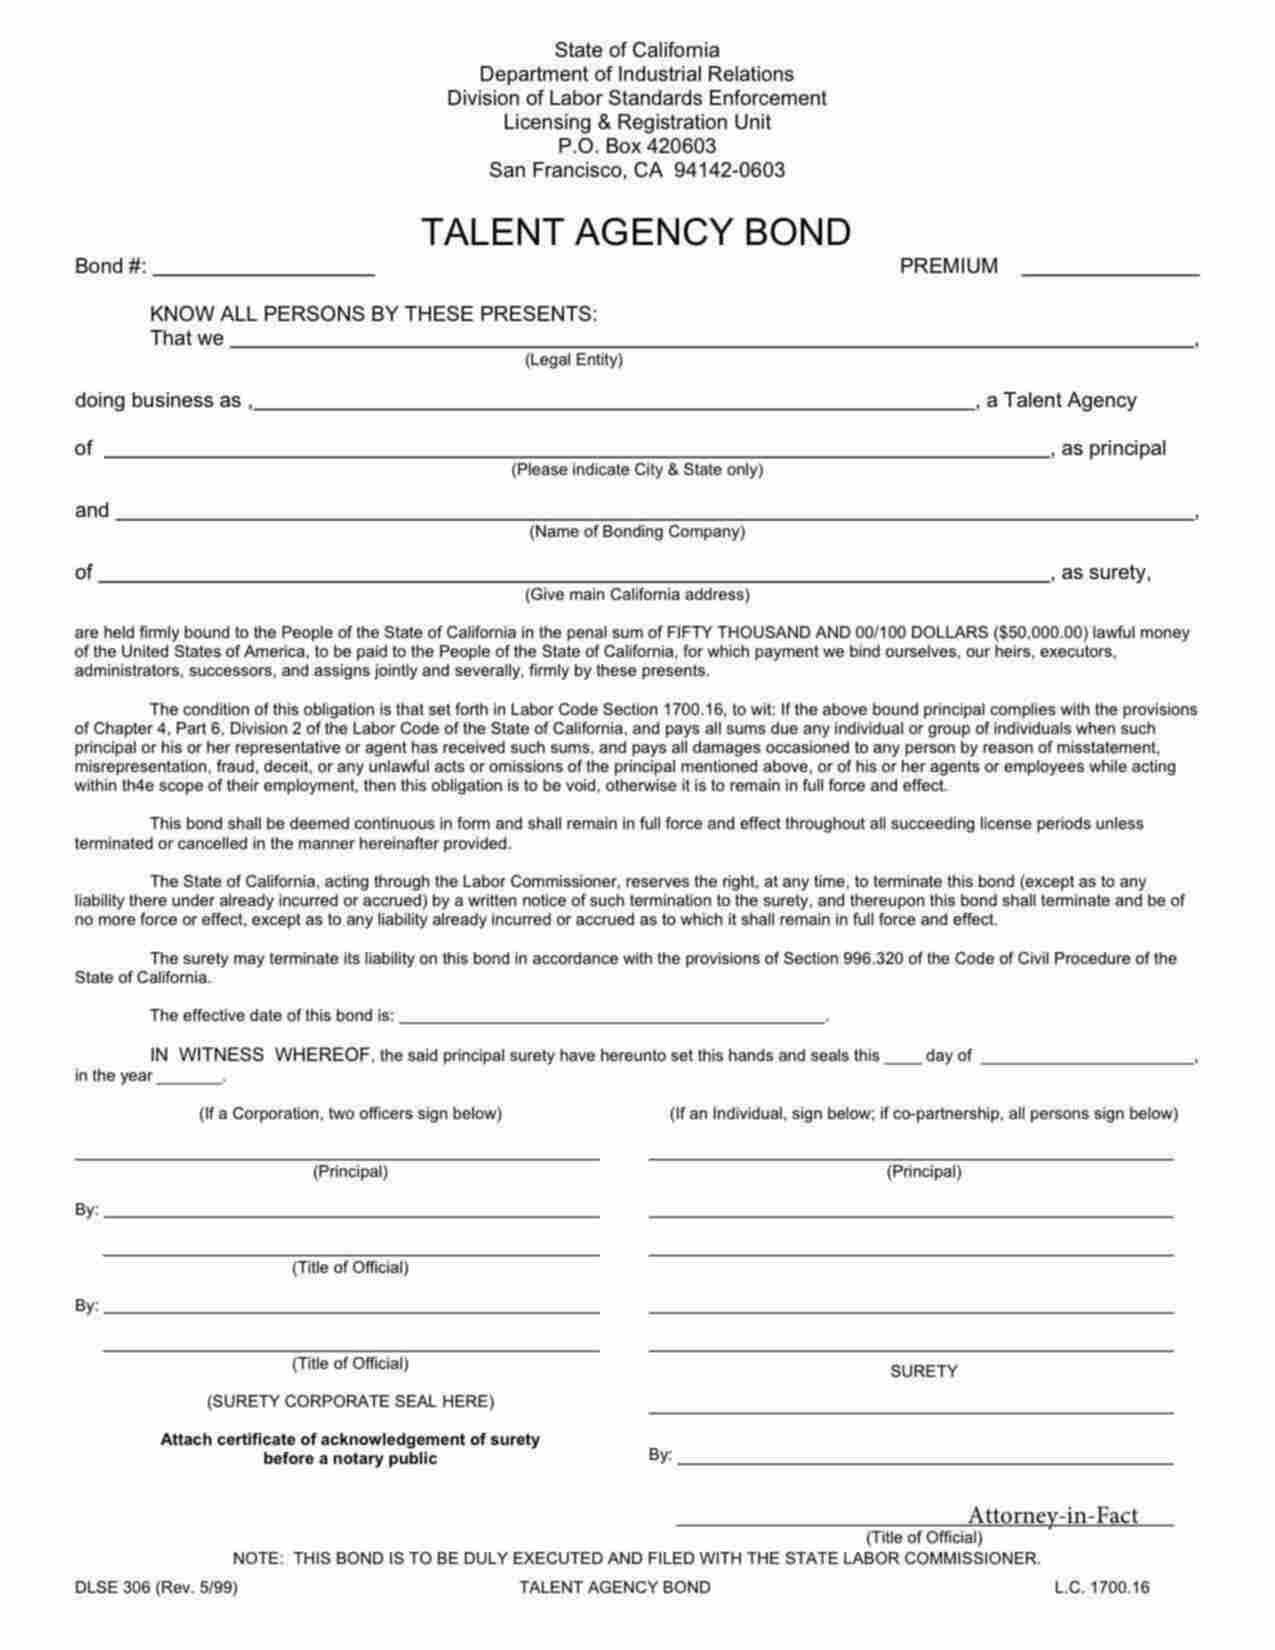 California Talent Agency Bond Form